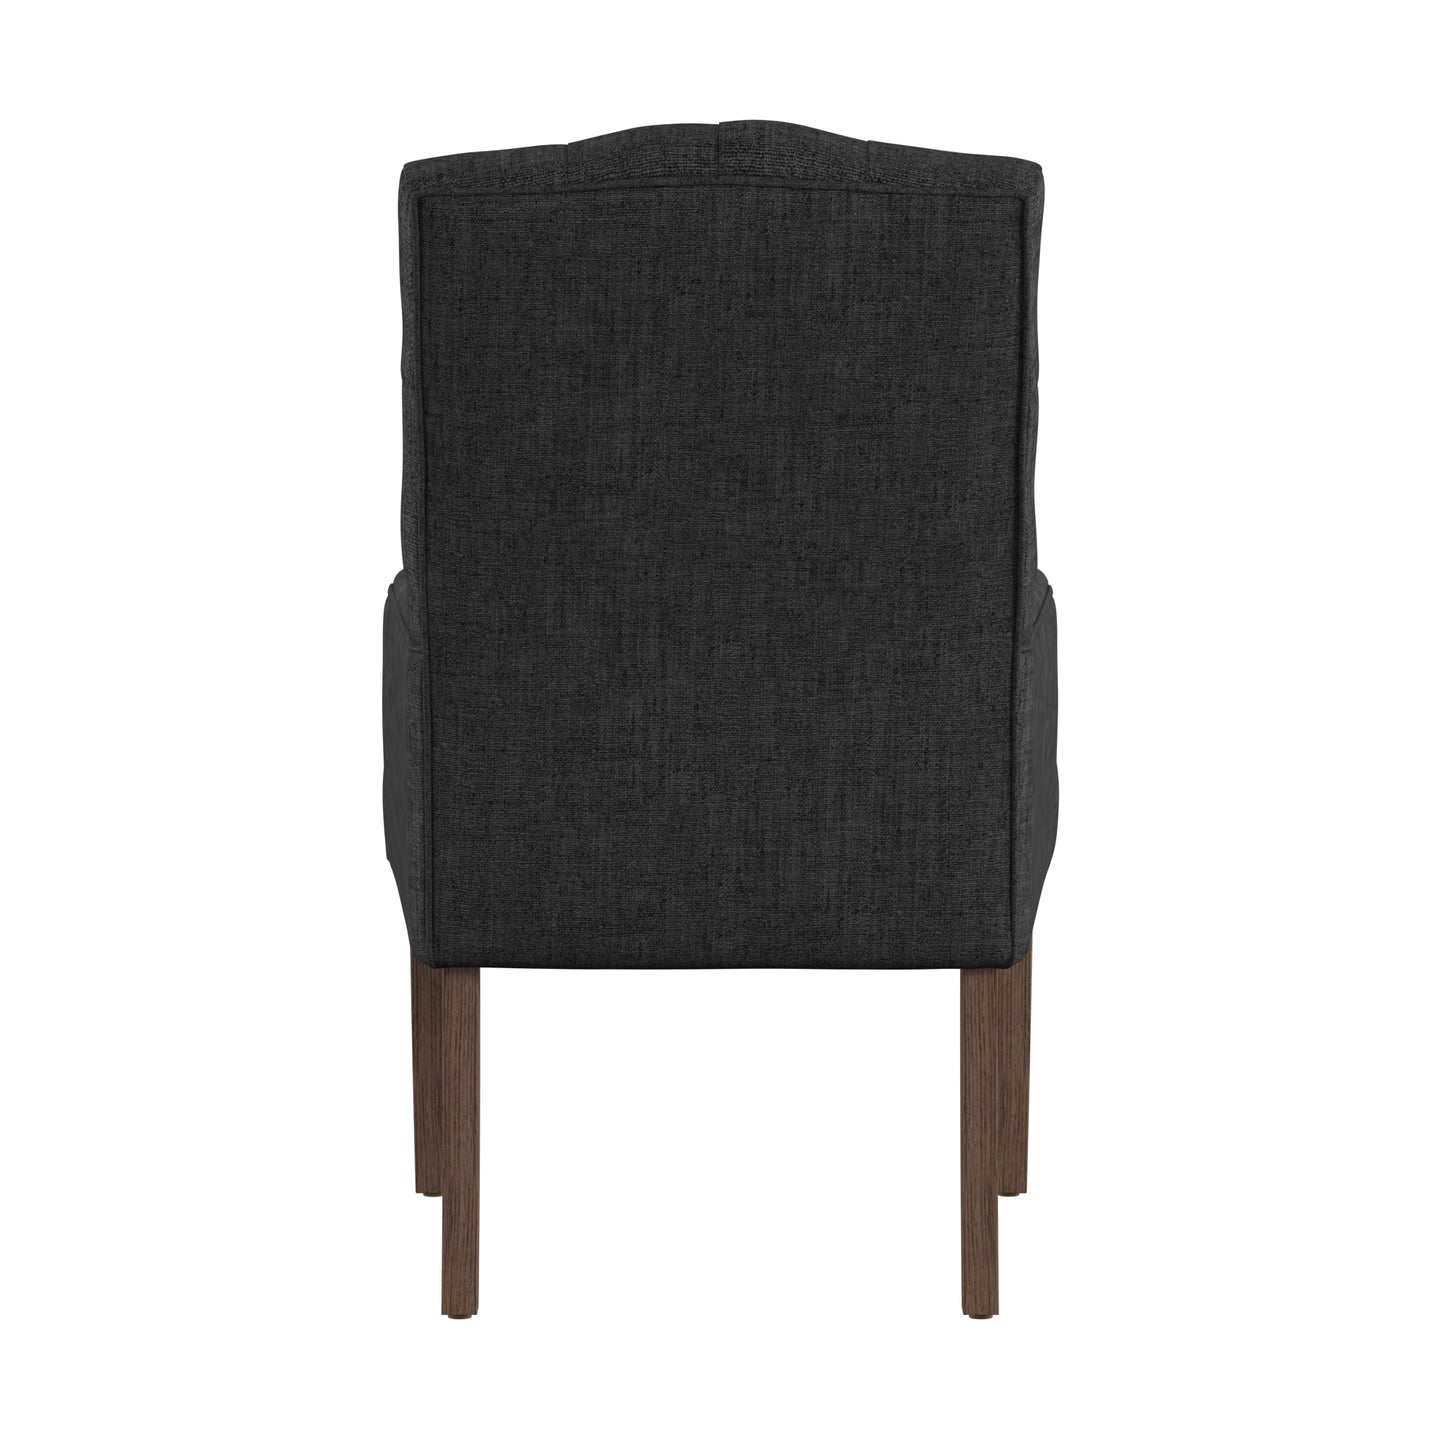 Light Distressed Natural Finish Linen Tufted Dining Chair - Dark Grey Linen